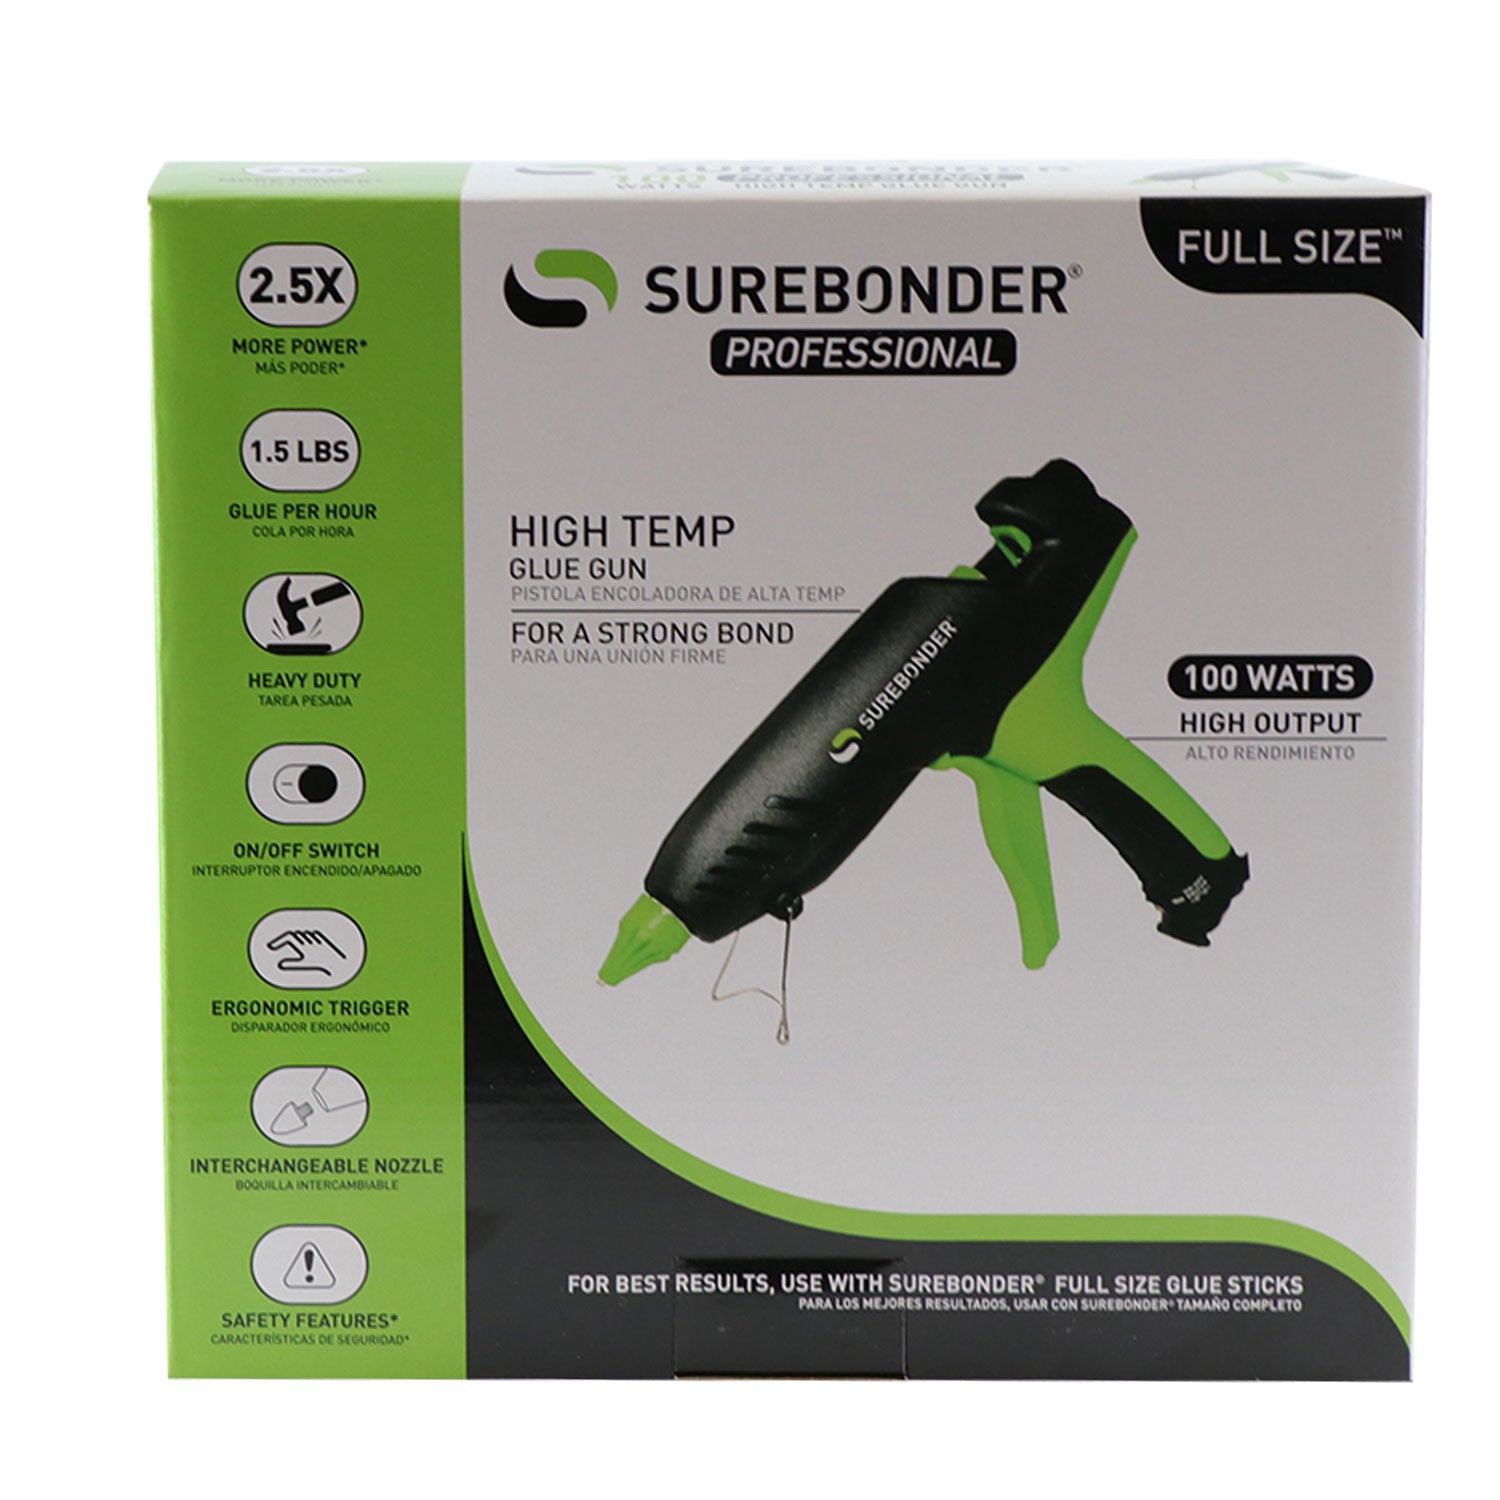 PRO2-100 100 Watt High Temperature Professional Heavy Duty Hot Glue Gun -  Uses full size, 7/16 glue sticks